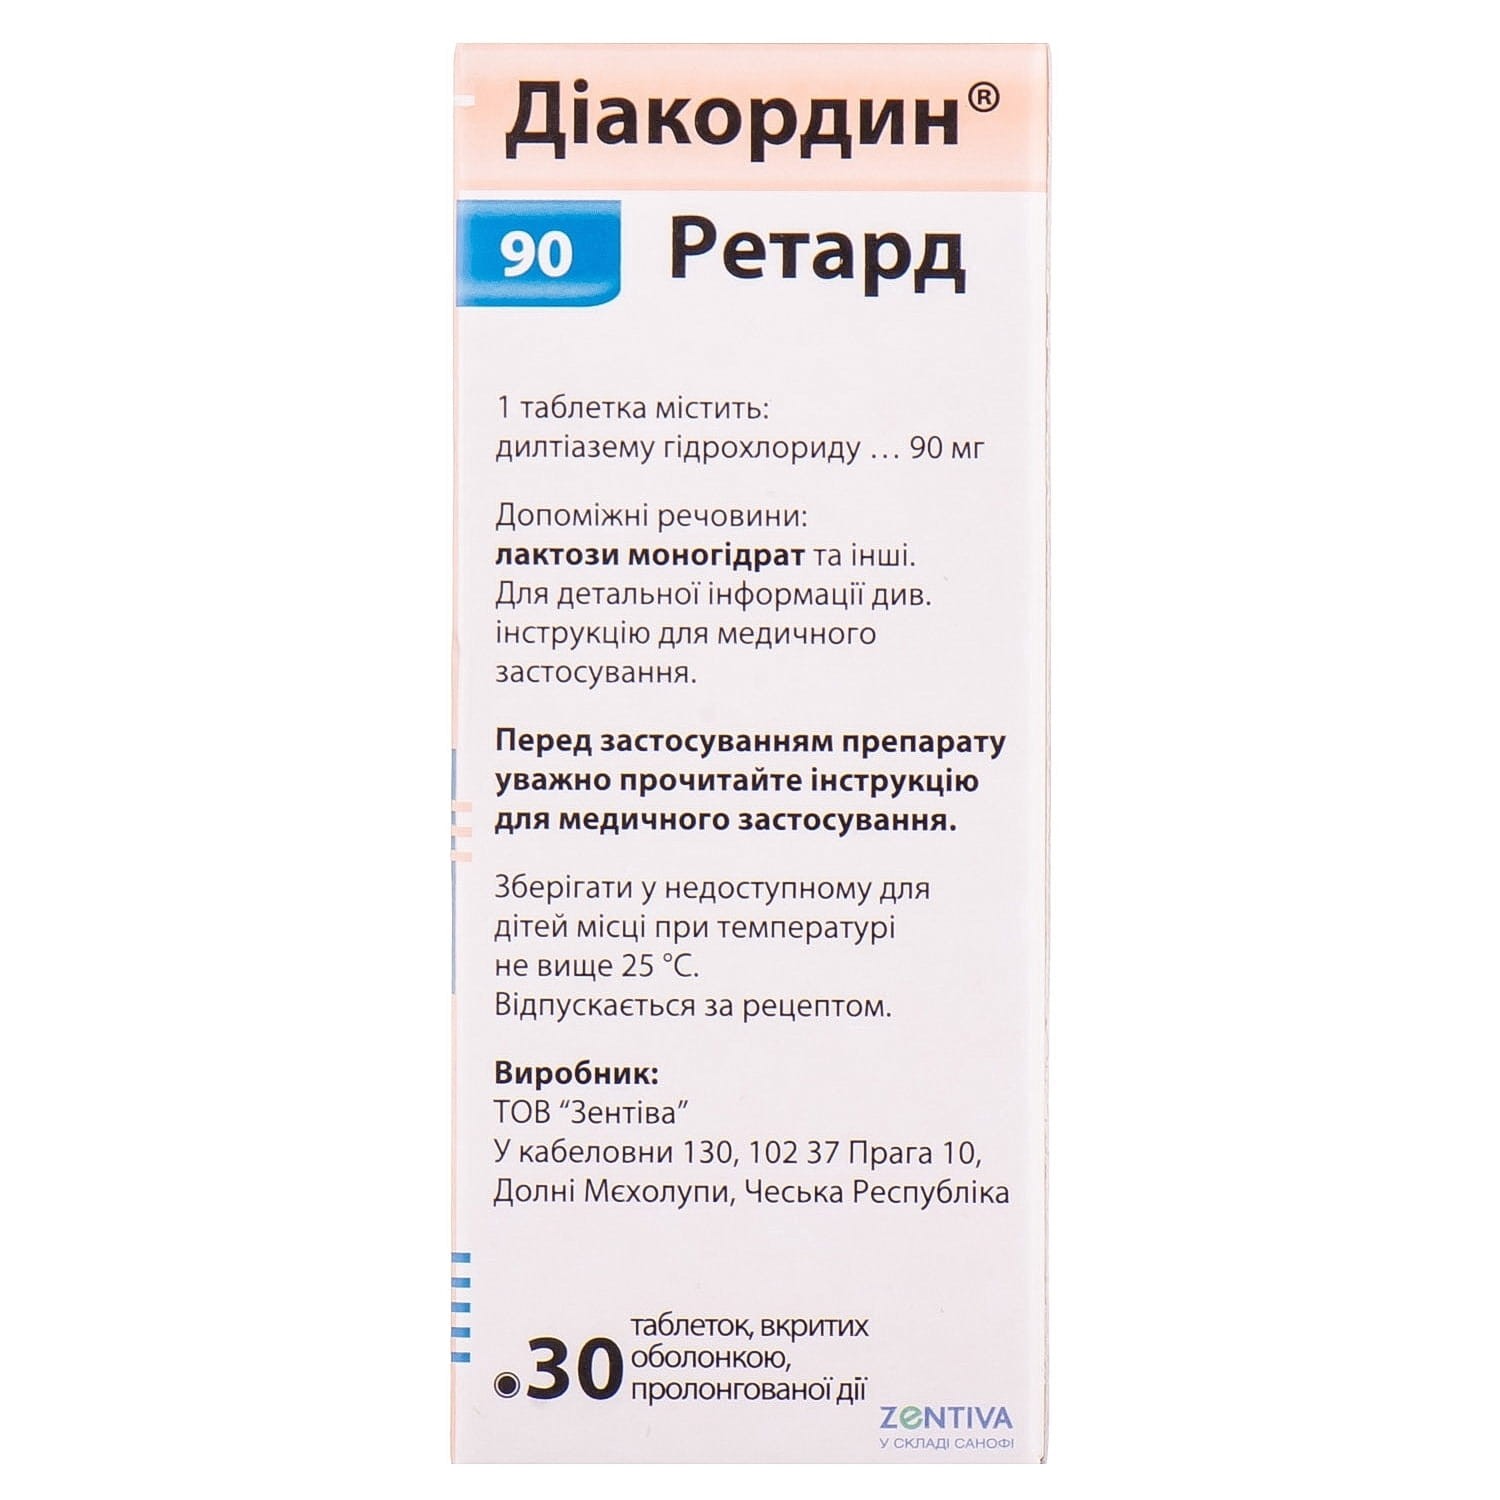 Диакордин Ретард таблетки по 90 мг, 30 шт.: инструкция, цена, отзывы .